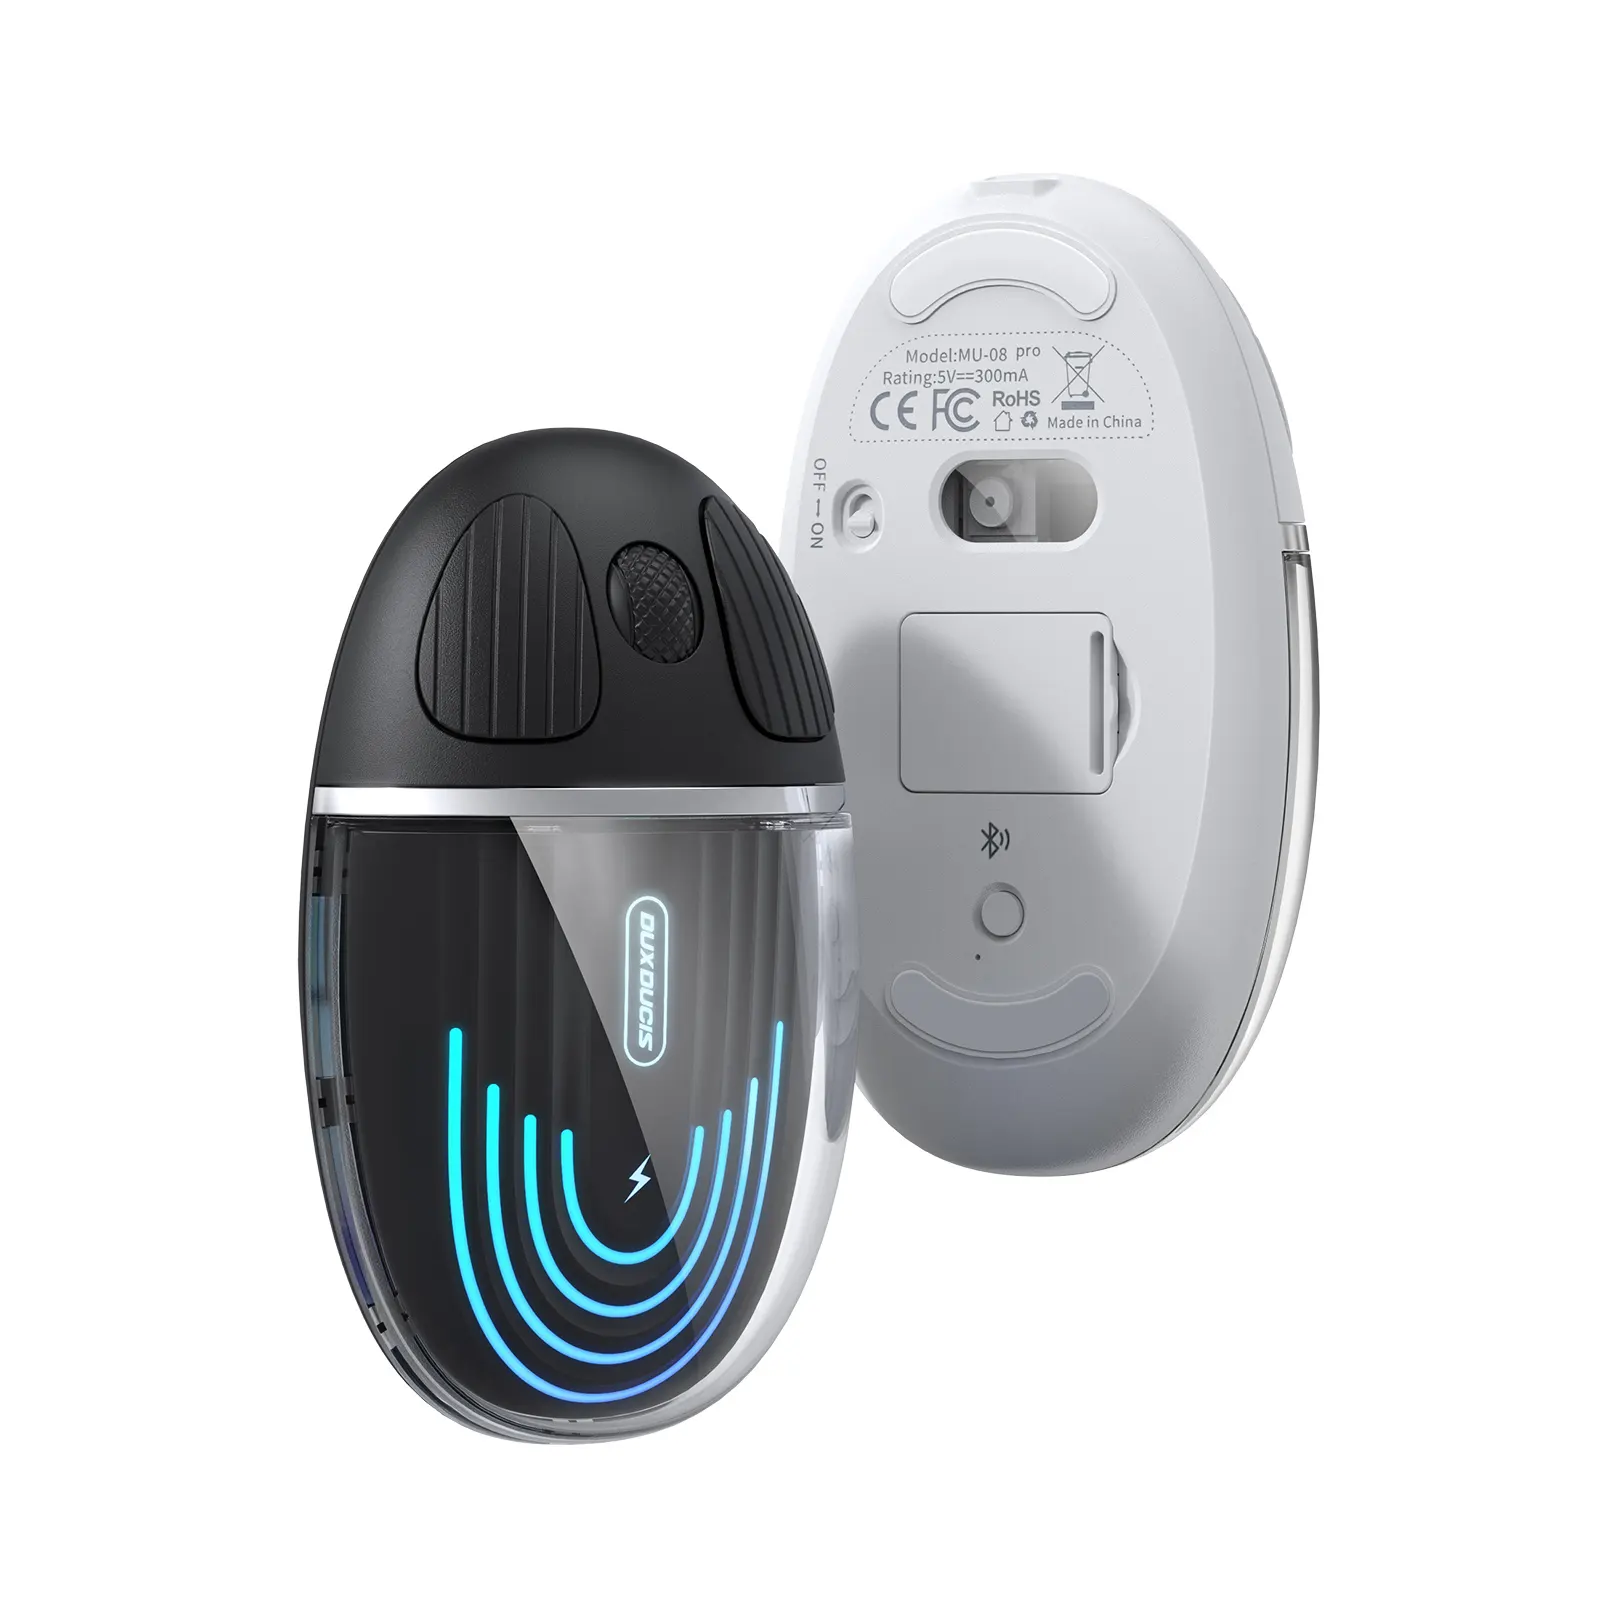 Mouse transparan nirkabel Bluetooth 2.4GHz dengan lampu latar warna-warni desain ergonomis klik sunyi Mouse Grip kompak